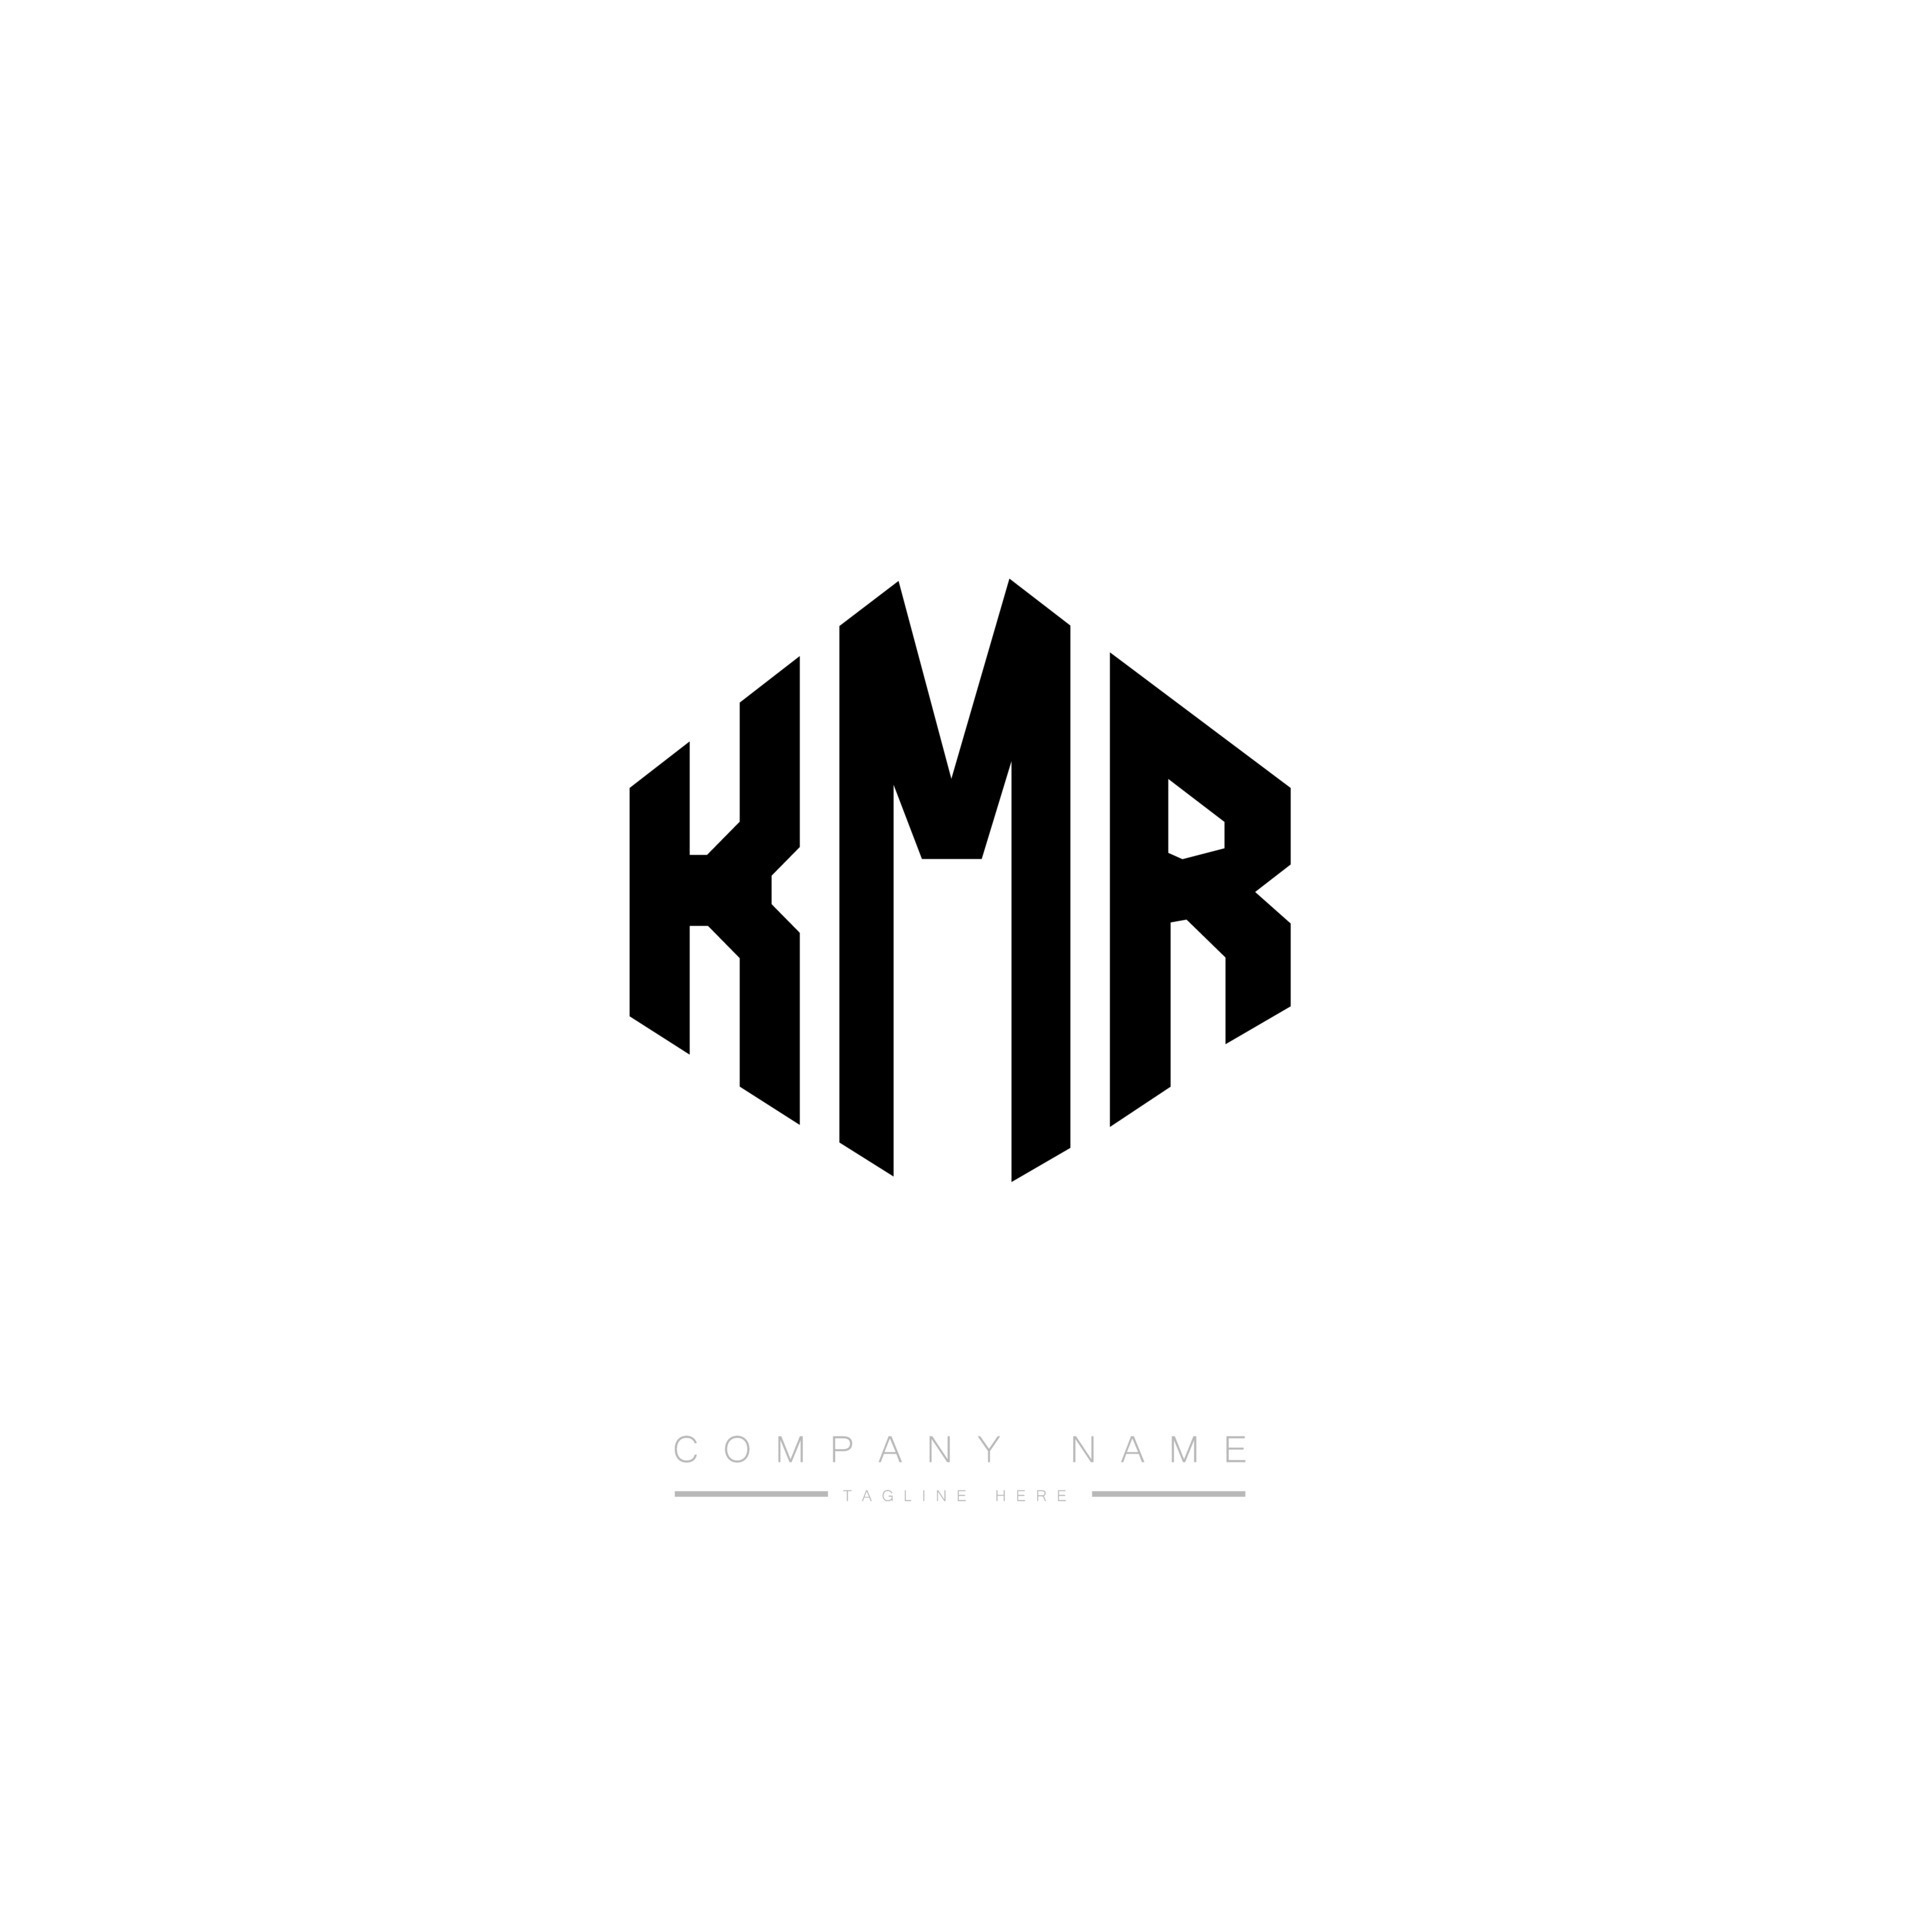 LOGO — KMR Design Studio